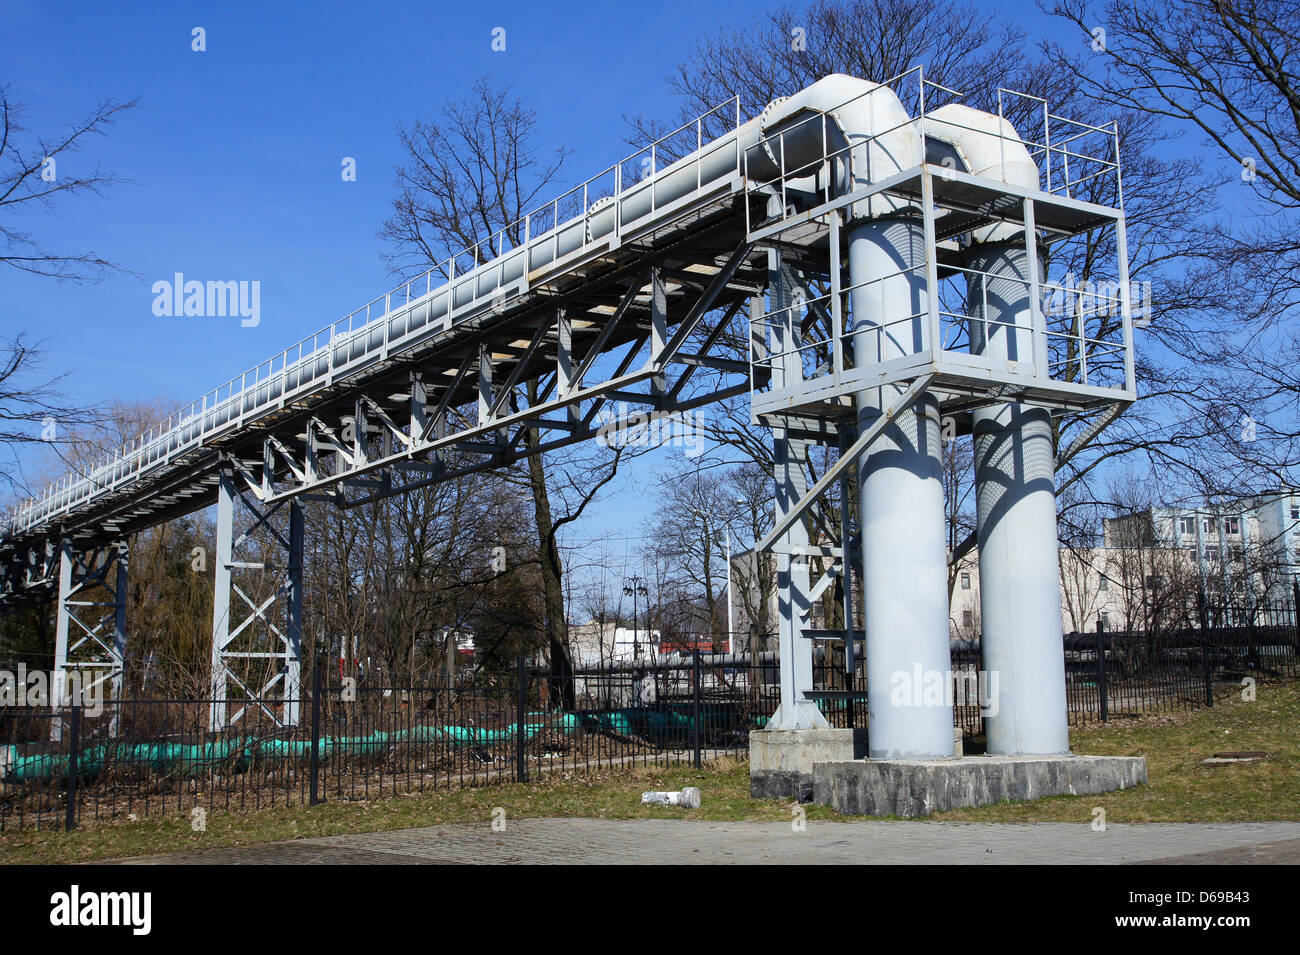 Industrial pipelines on pipe-bridge against blue sky Stock Photo